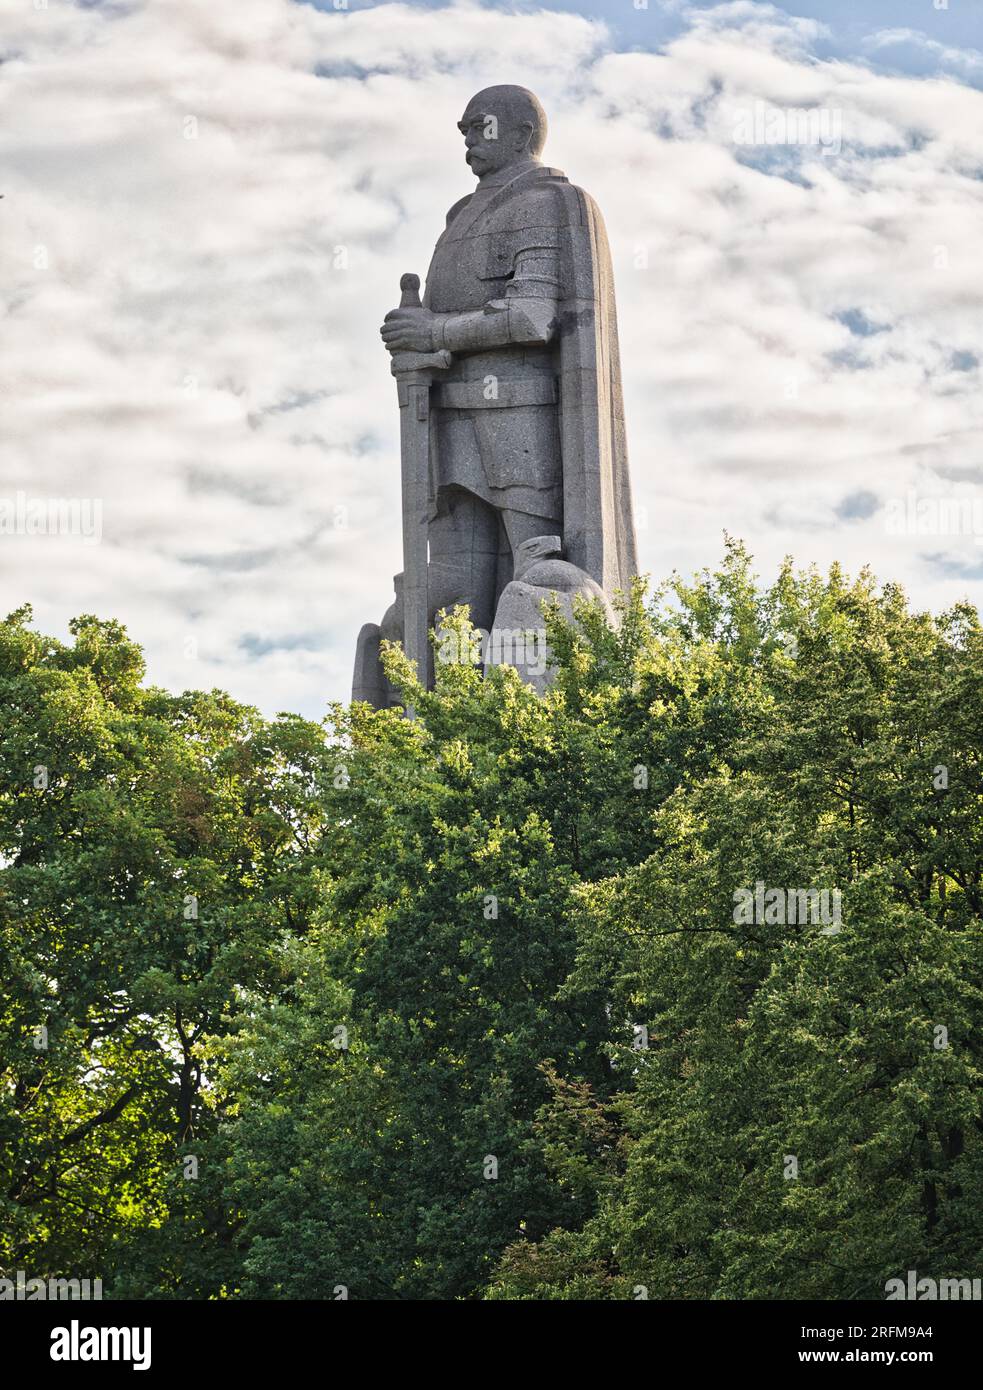 Monumento in granito alto 35 metri a otto Von Bismarck, primo Cancelliere tedesco, Alter Elbpark, Amburgo, Germania Foto Stock